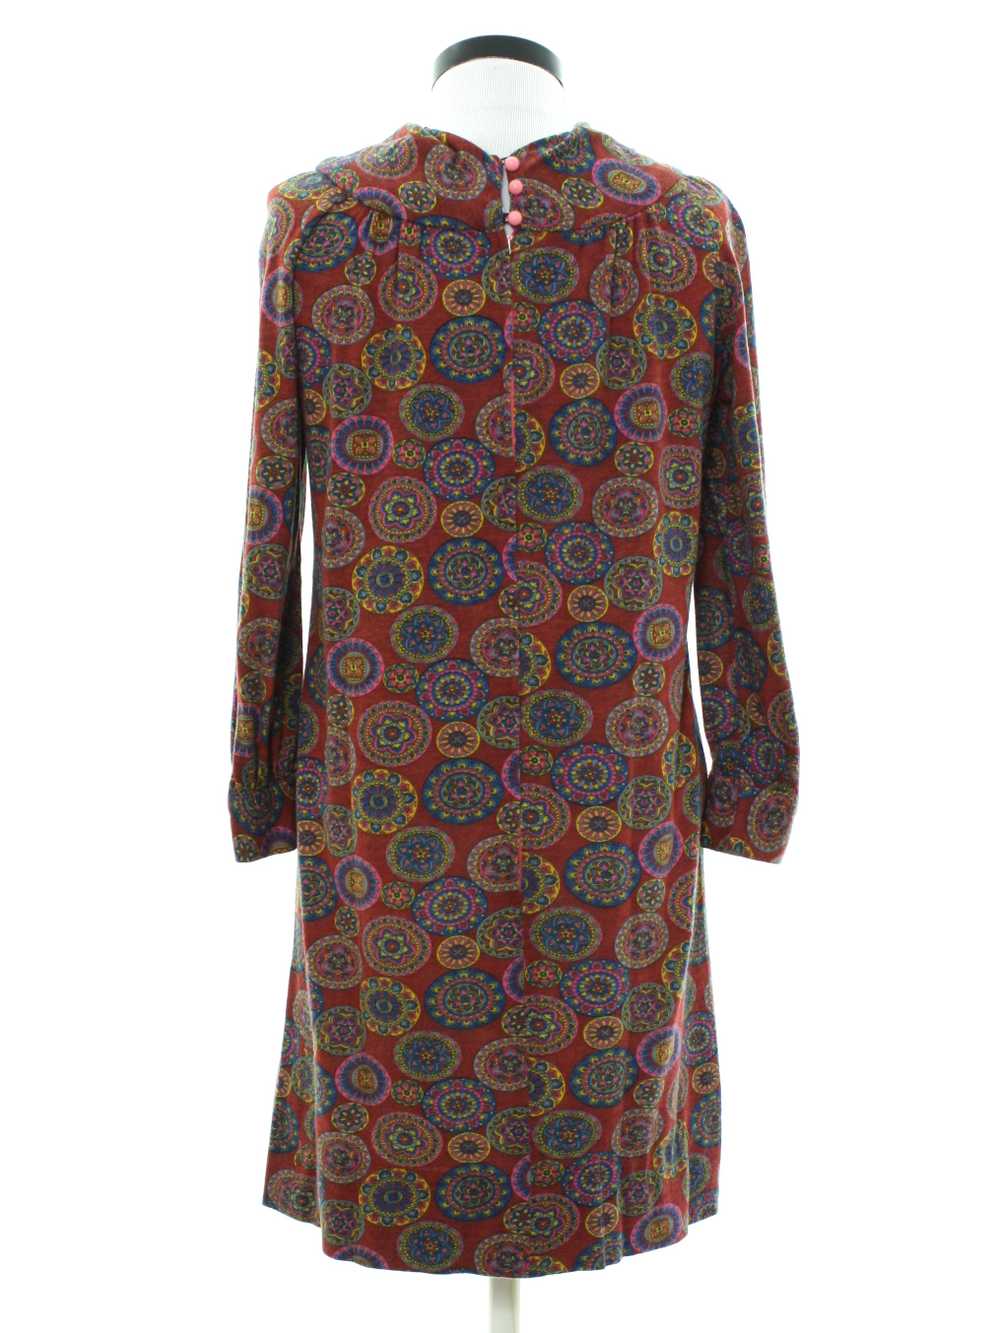 1970's Shift Style Hippie Dress - image 3